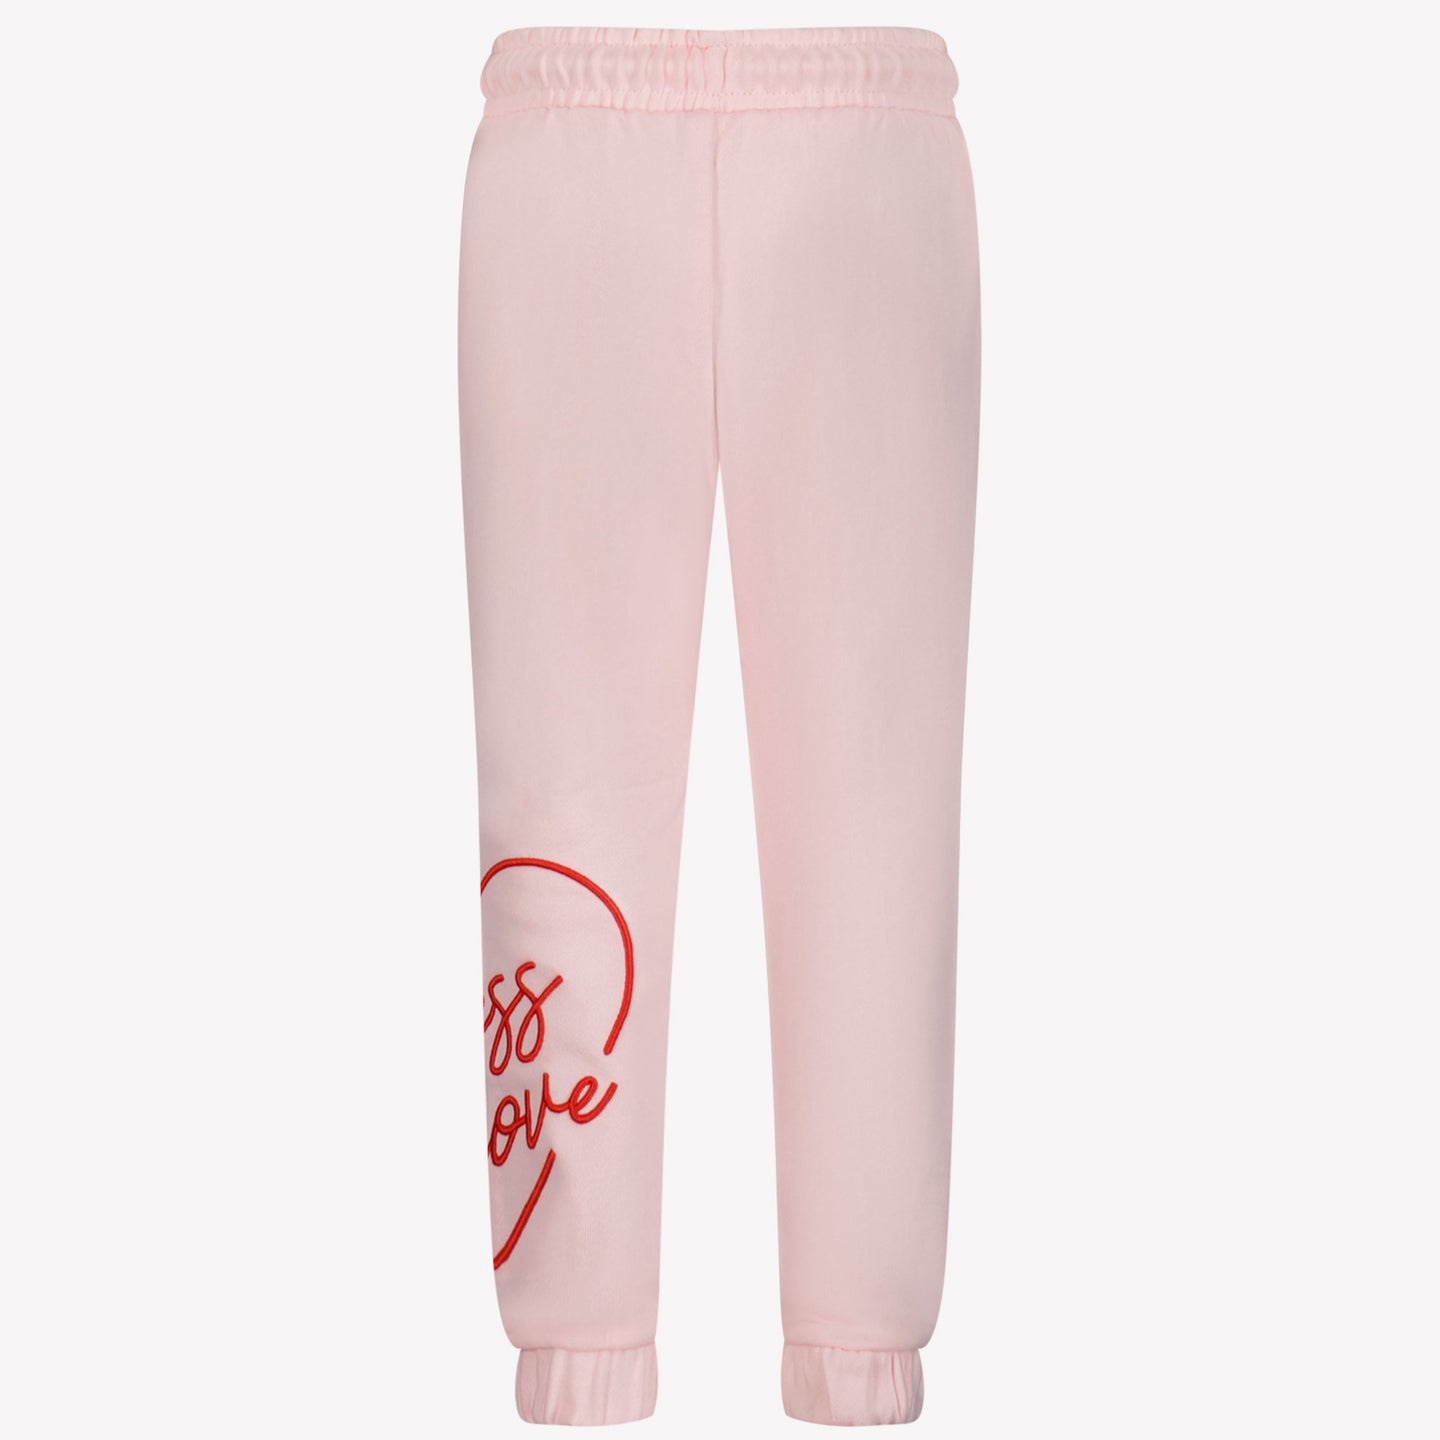 Guess Pantalones de chicas rosa claro